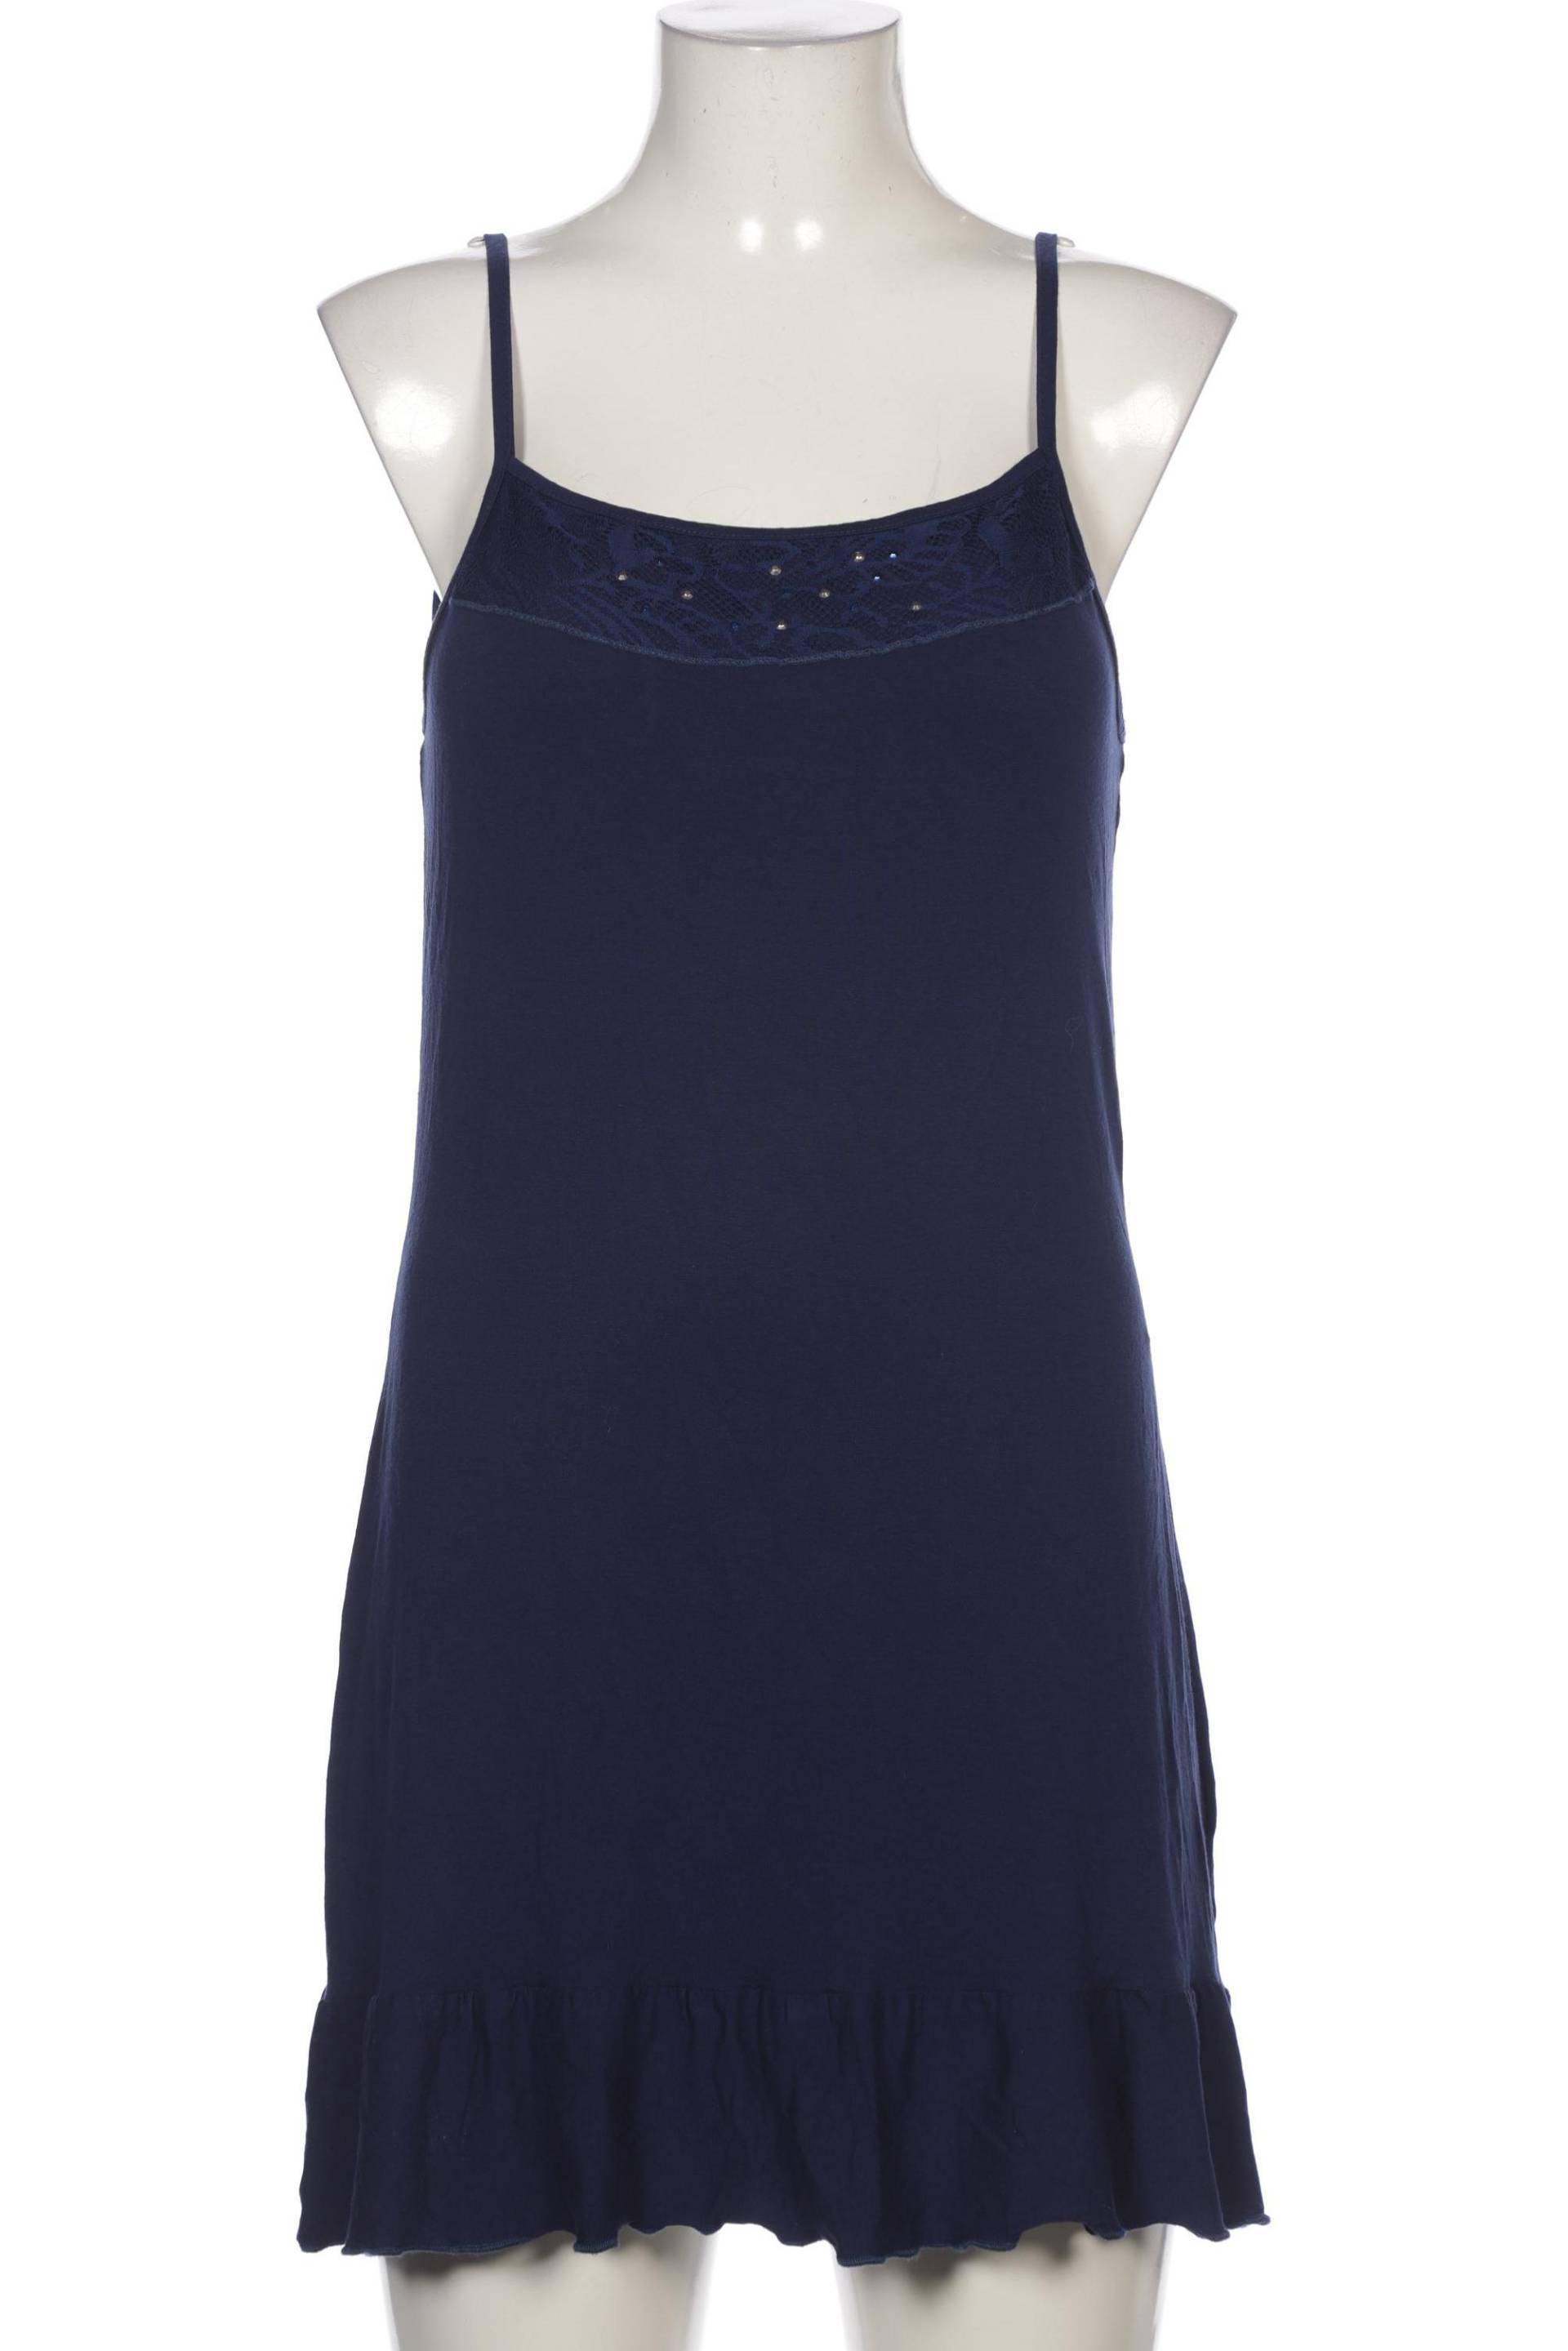 BiBA Damen Kleid, marineblau, Gr. 38 von BiBA